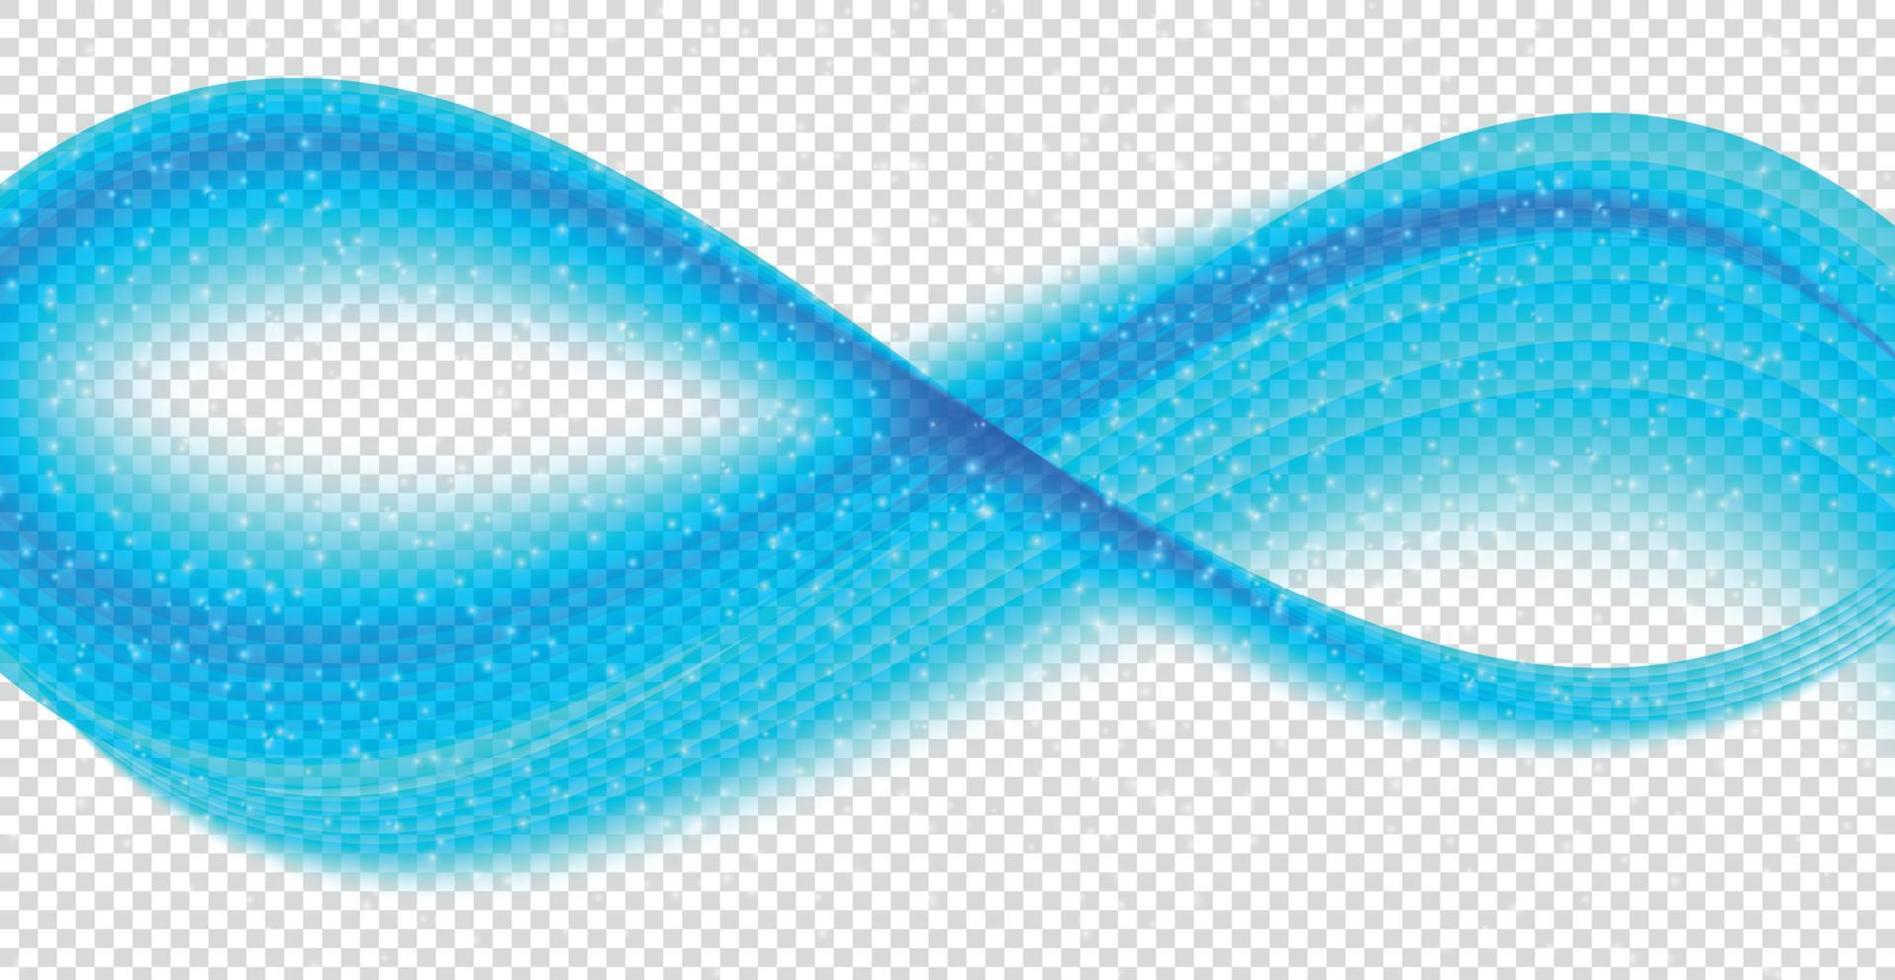 Set of Abstract Blue Wave Set on Transparent  Background. Vector Illustration